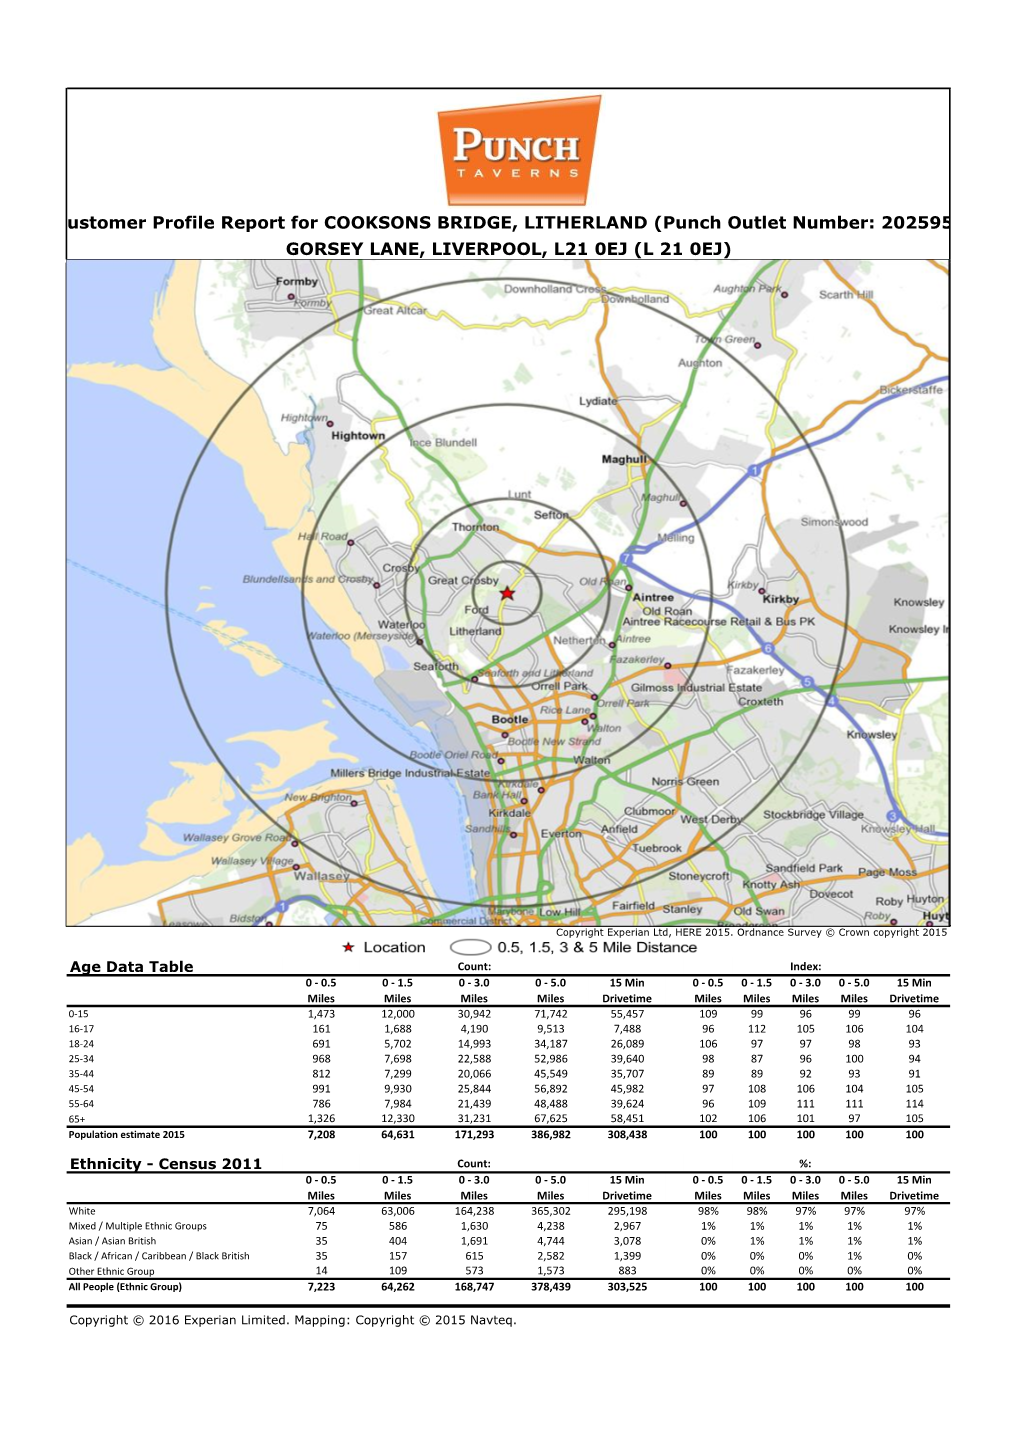 Customer Profile Report for COOKSONS BRIDGE, LITHERLAND (Punch Outlet Number: 202595) GORSEY LANE, LIVERPOOL, L21 0EJ (L 21 0EJ)